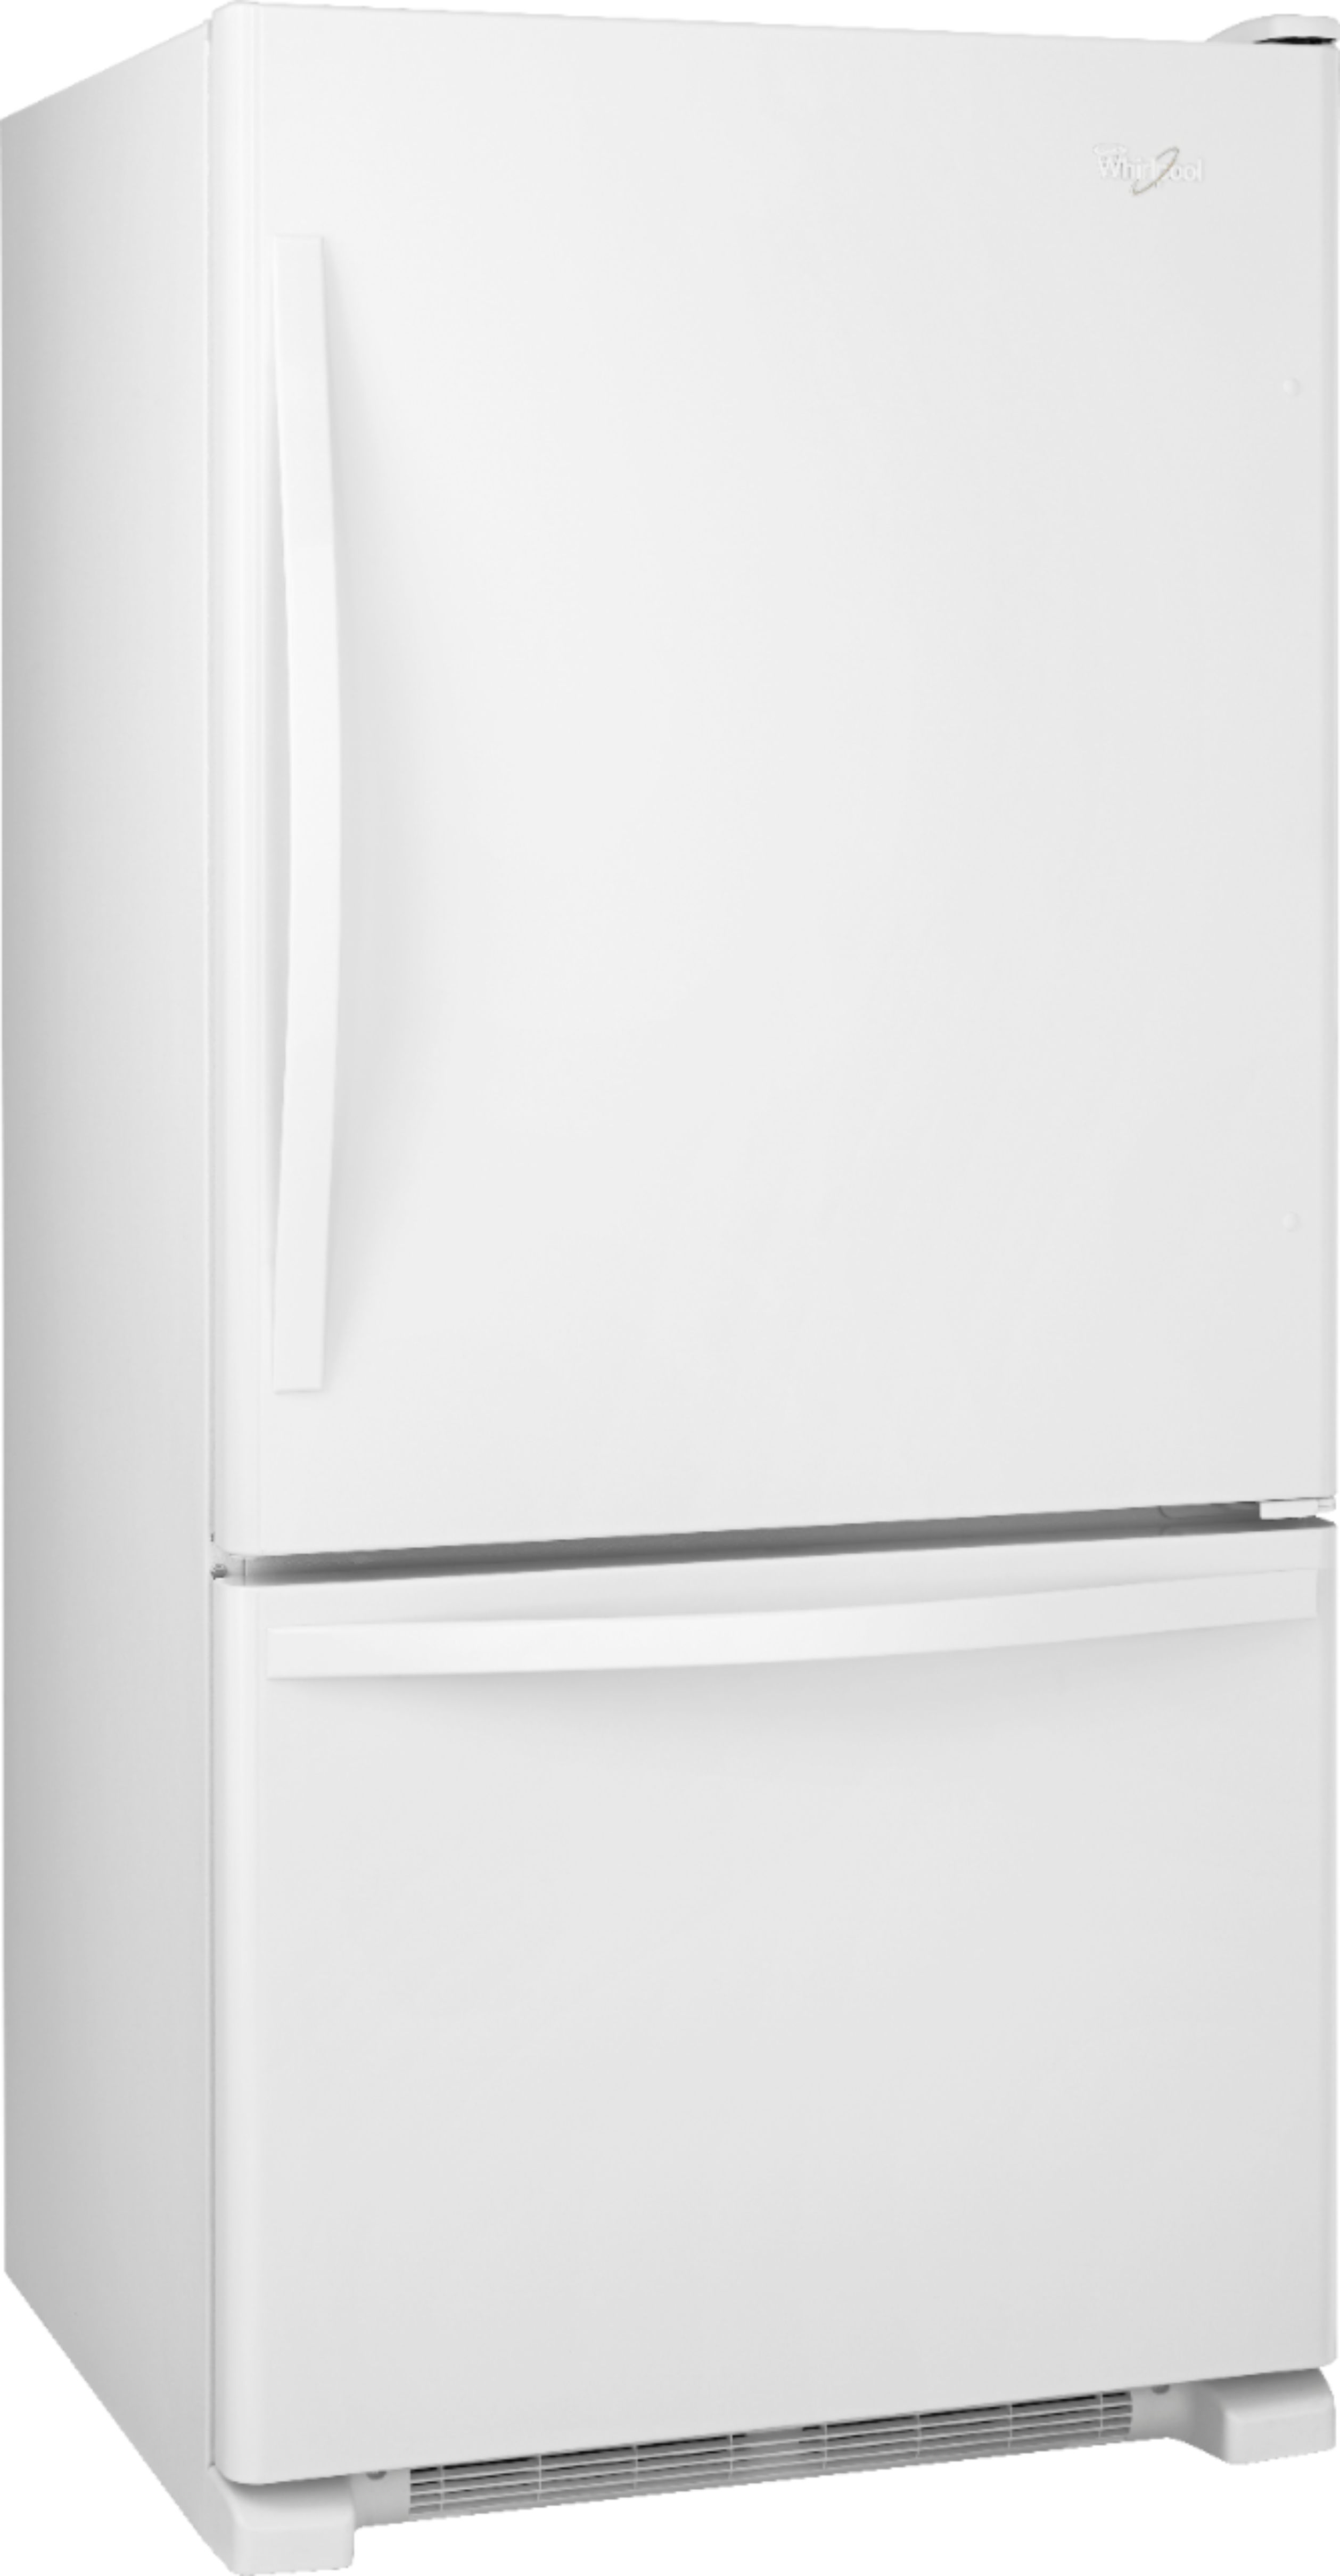 Whirlpool® Gold® 22.1 Cu. Ft. Black Bottom Freezer Refrigerator